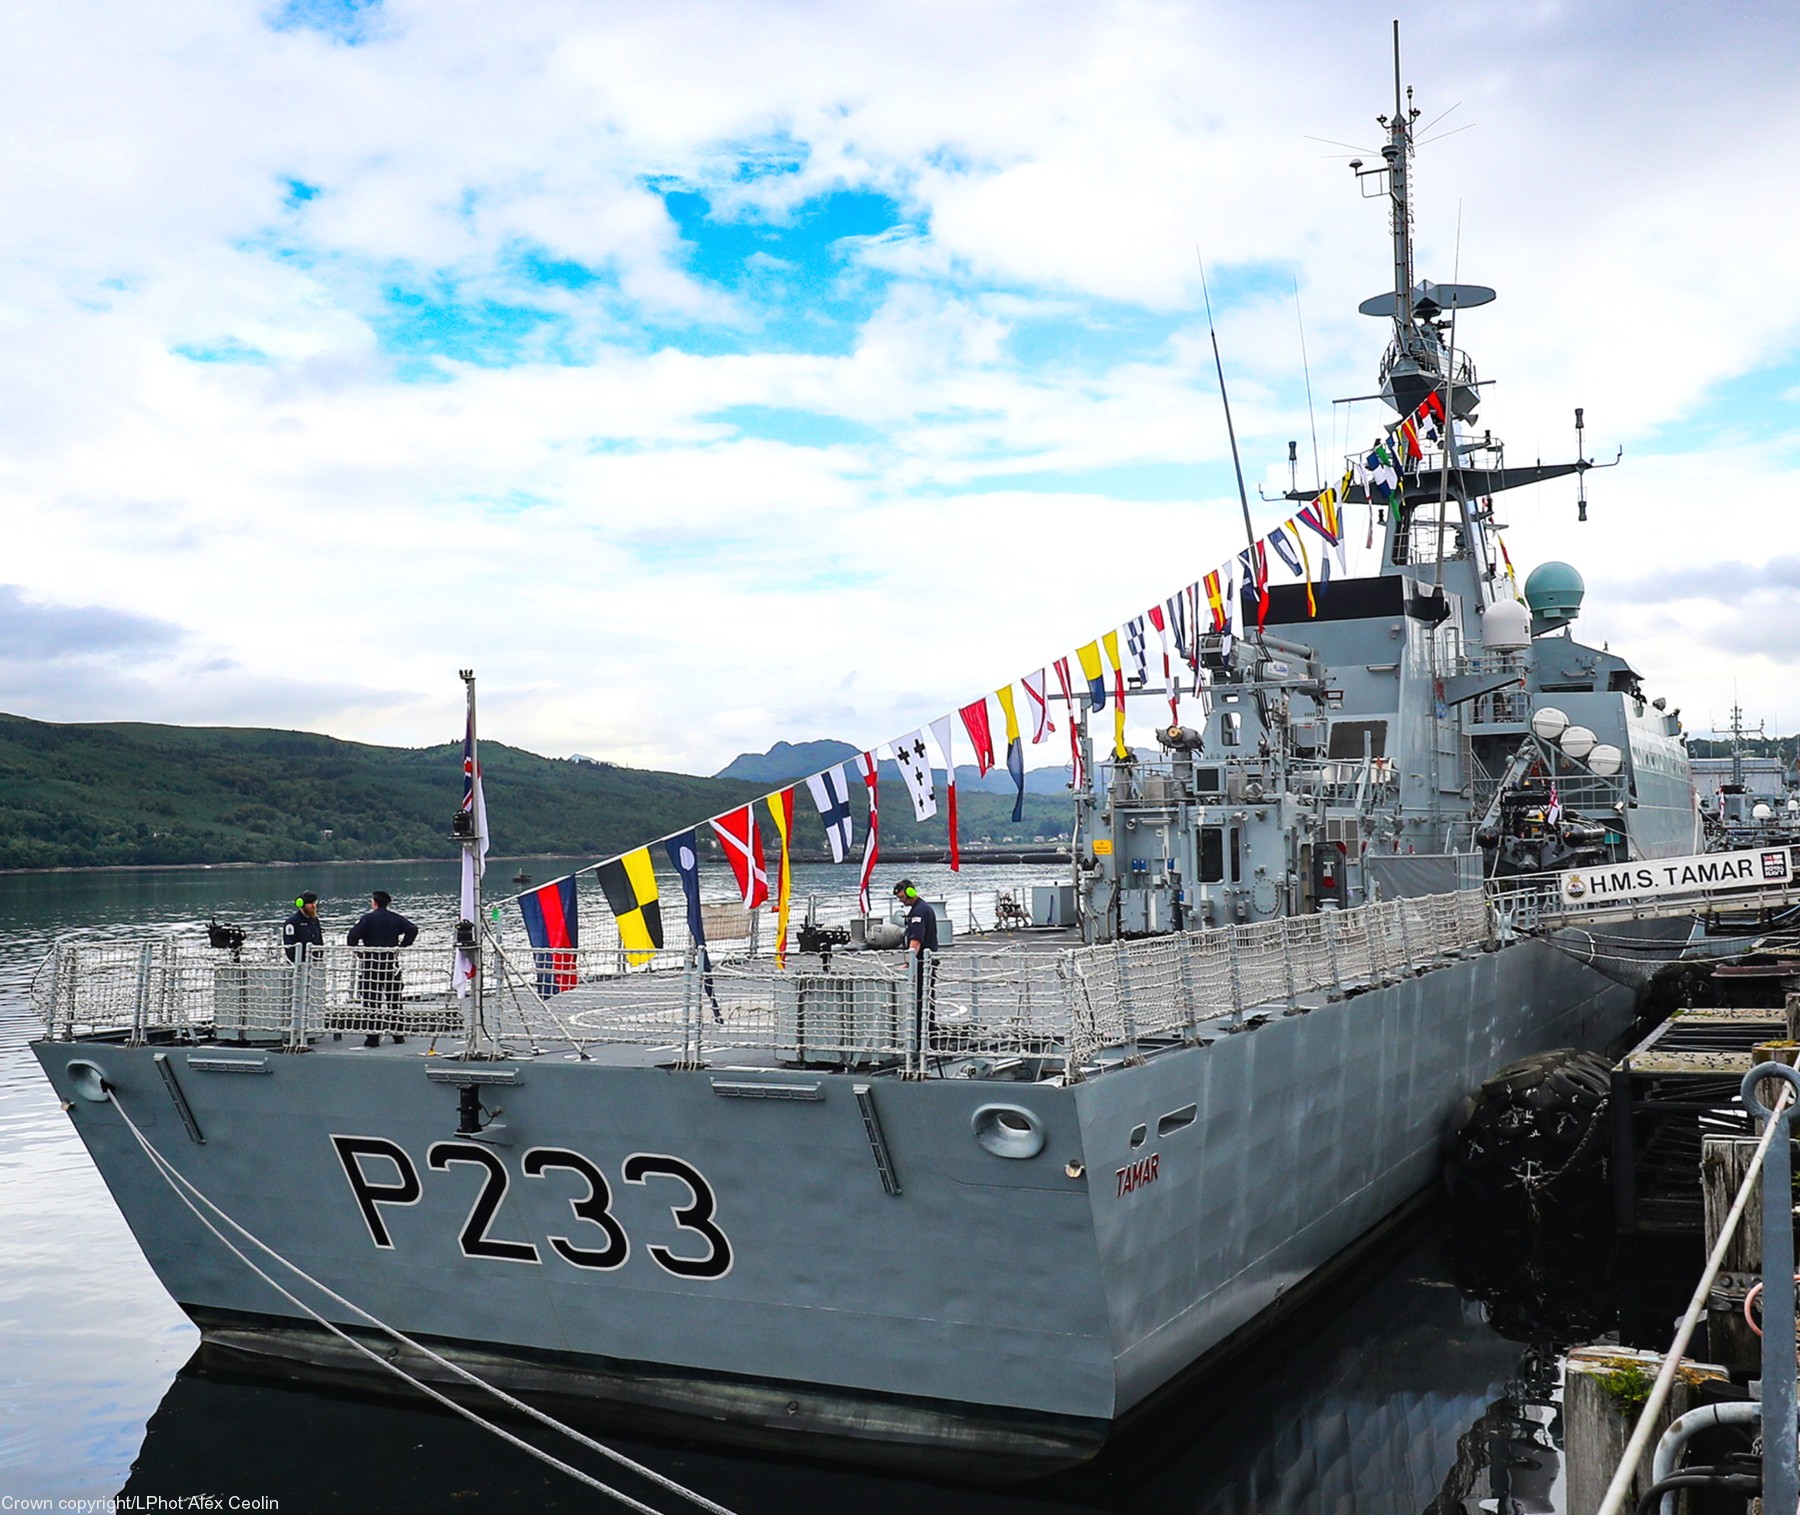 hms tamar p-233 river class offshore patrol vessel royal navy